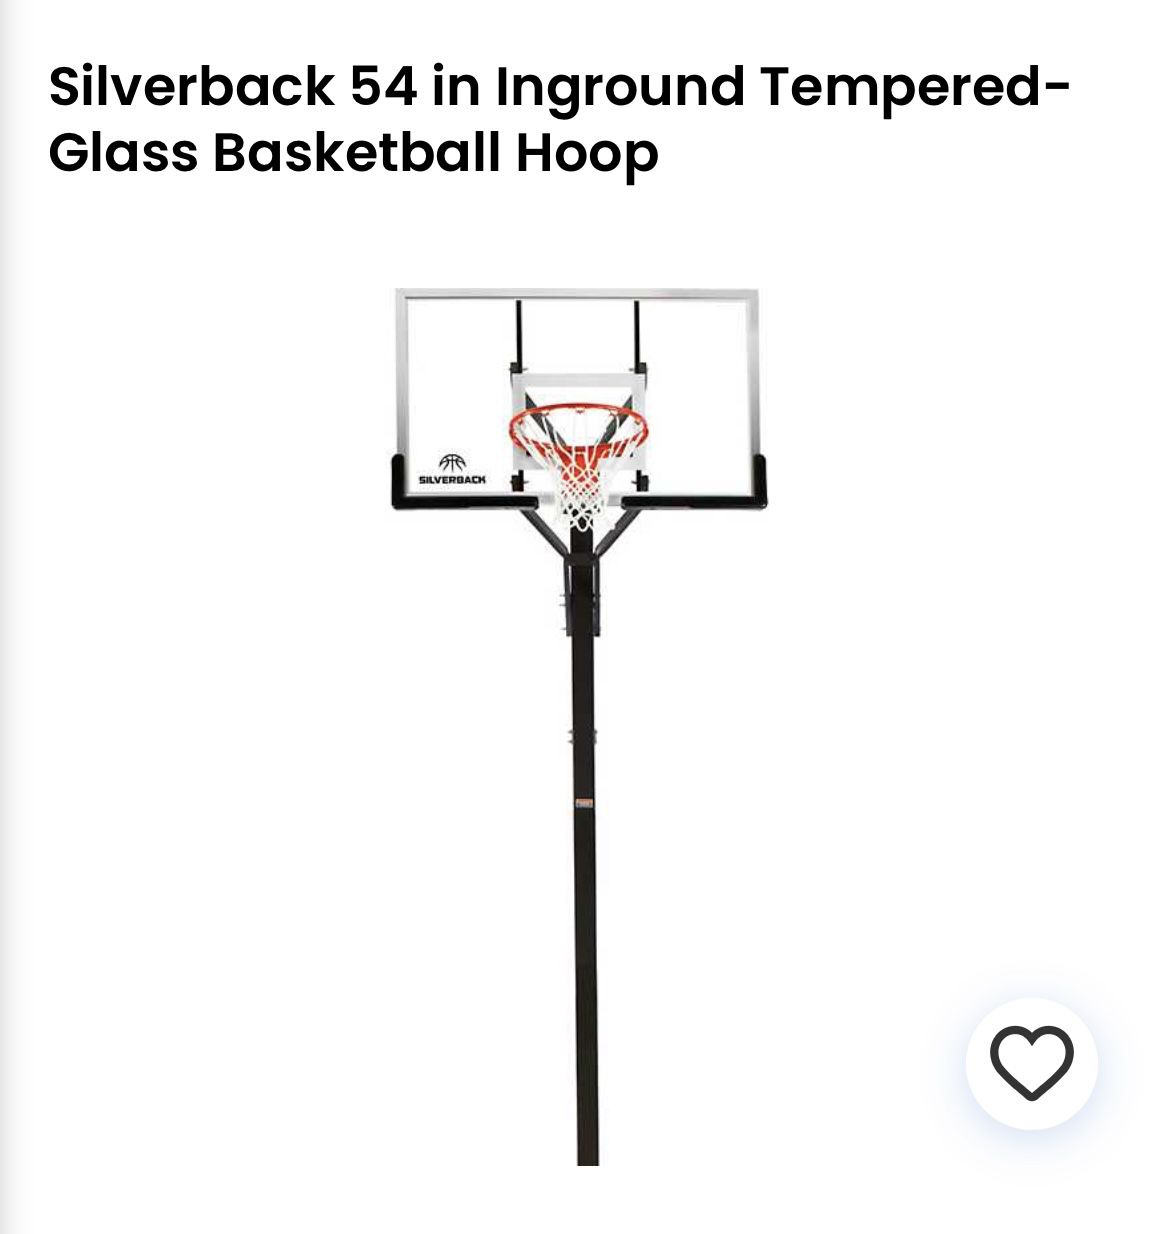 Silverback 54 in Inground Tempered-Glass Basketball Hoop